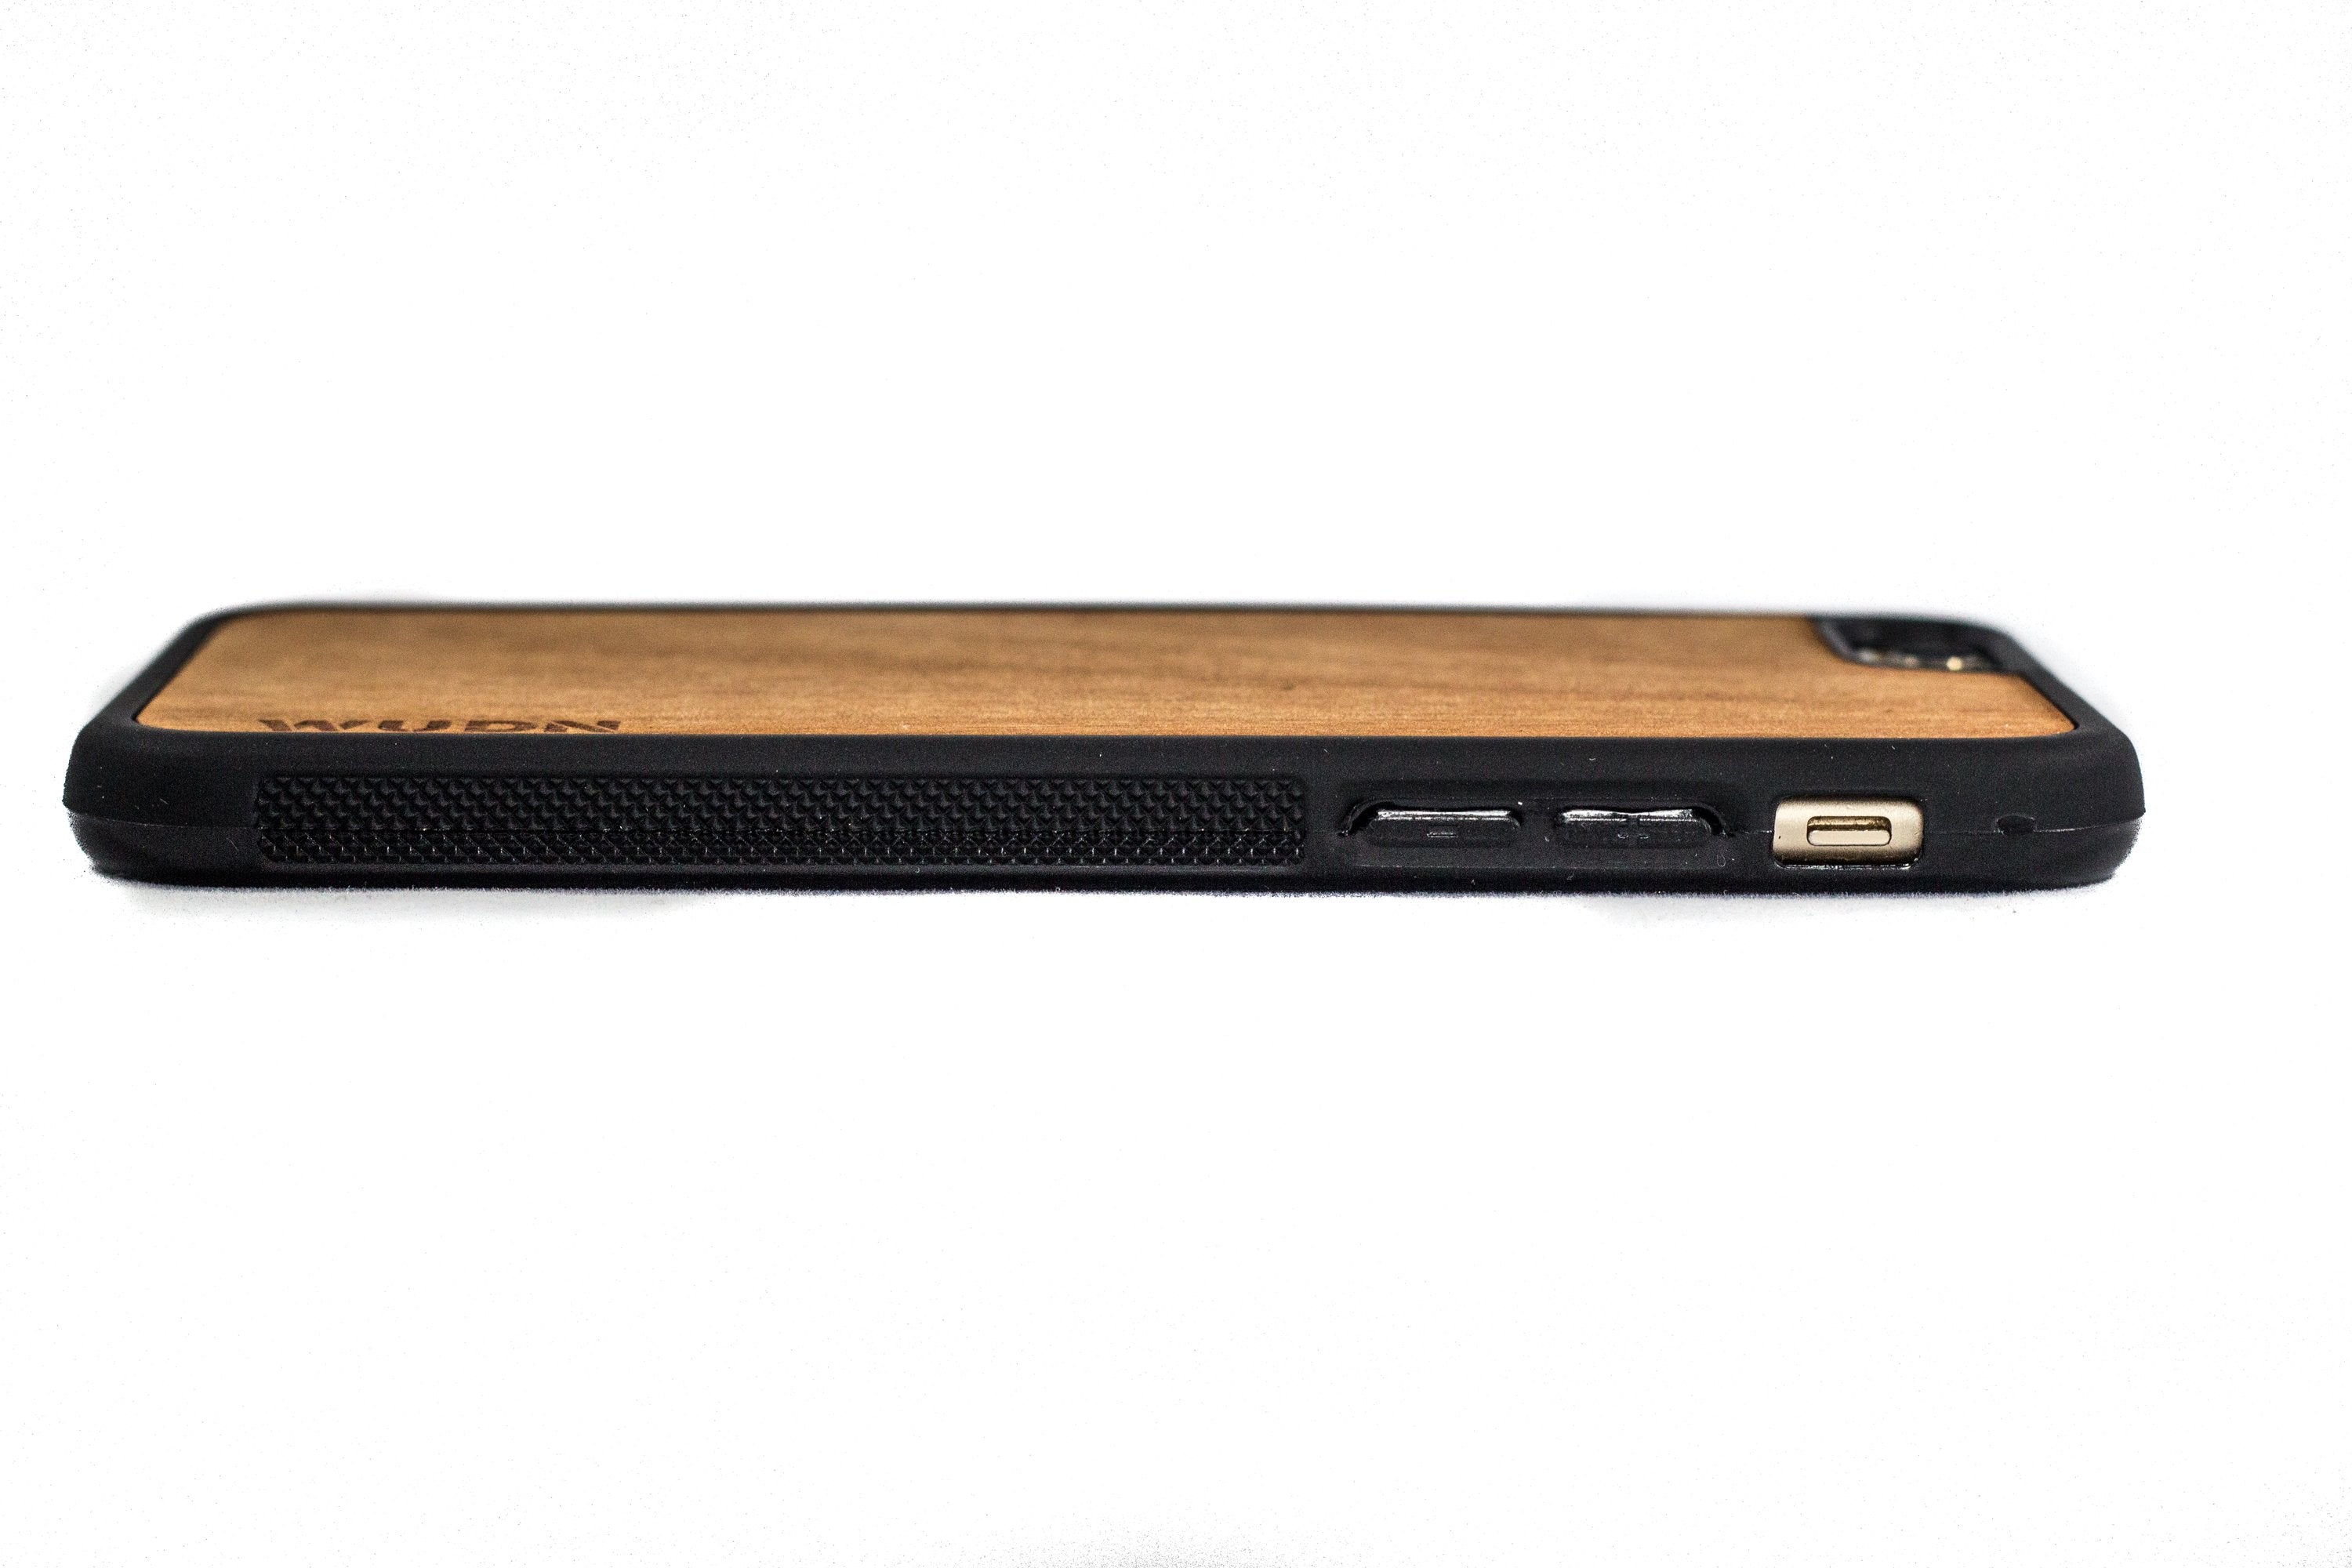 Slim Wooden Phone Case (Walnut / Bamboo Stripe)